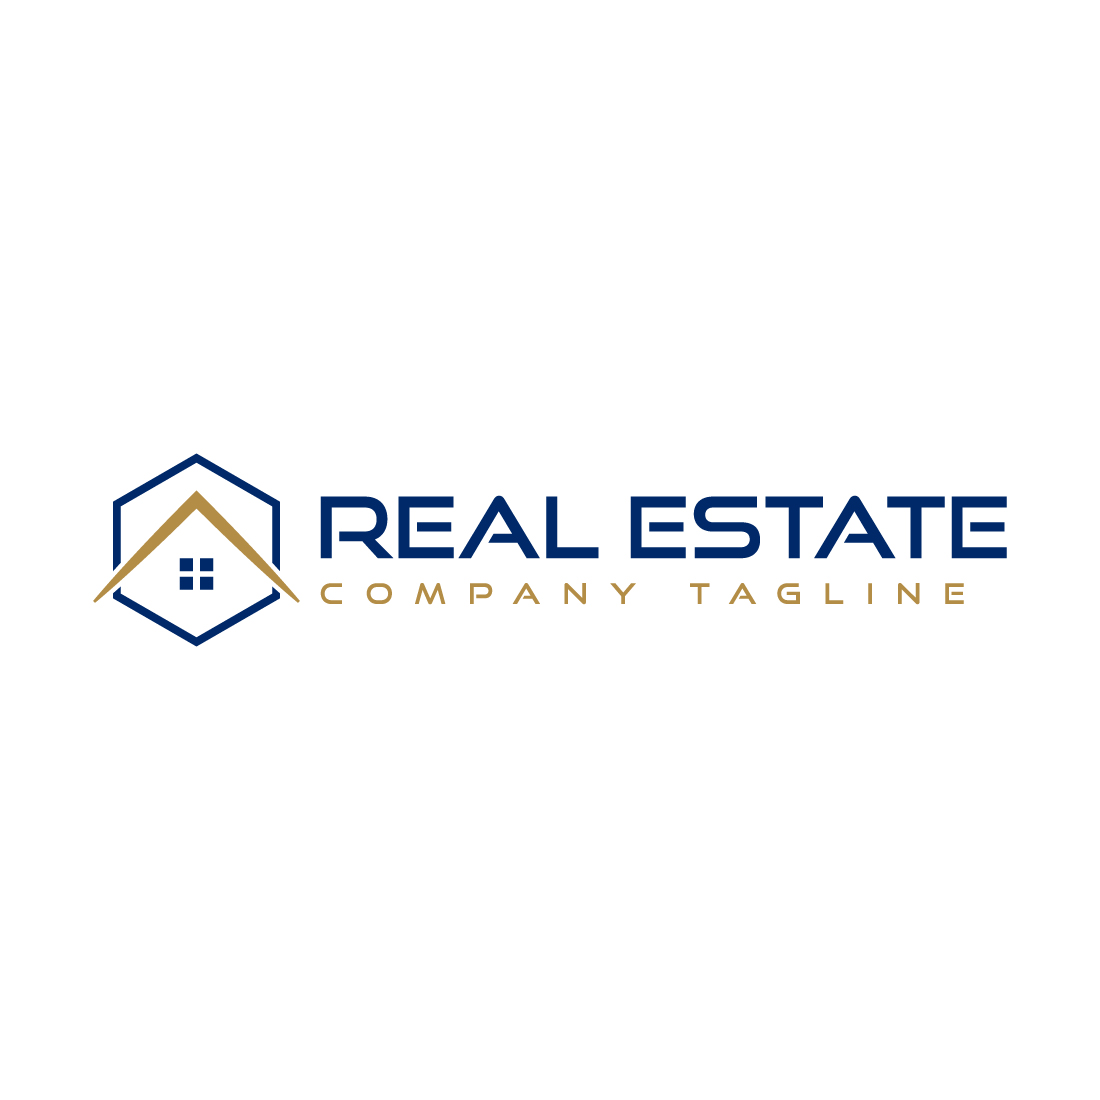 Real estate logo with golden, dark blue color preview image.